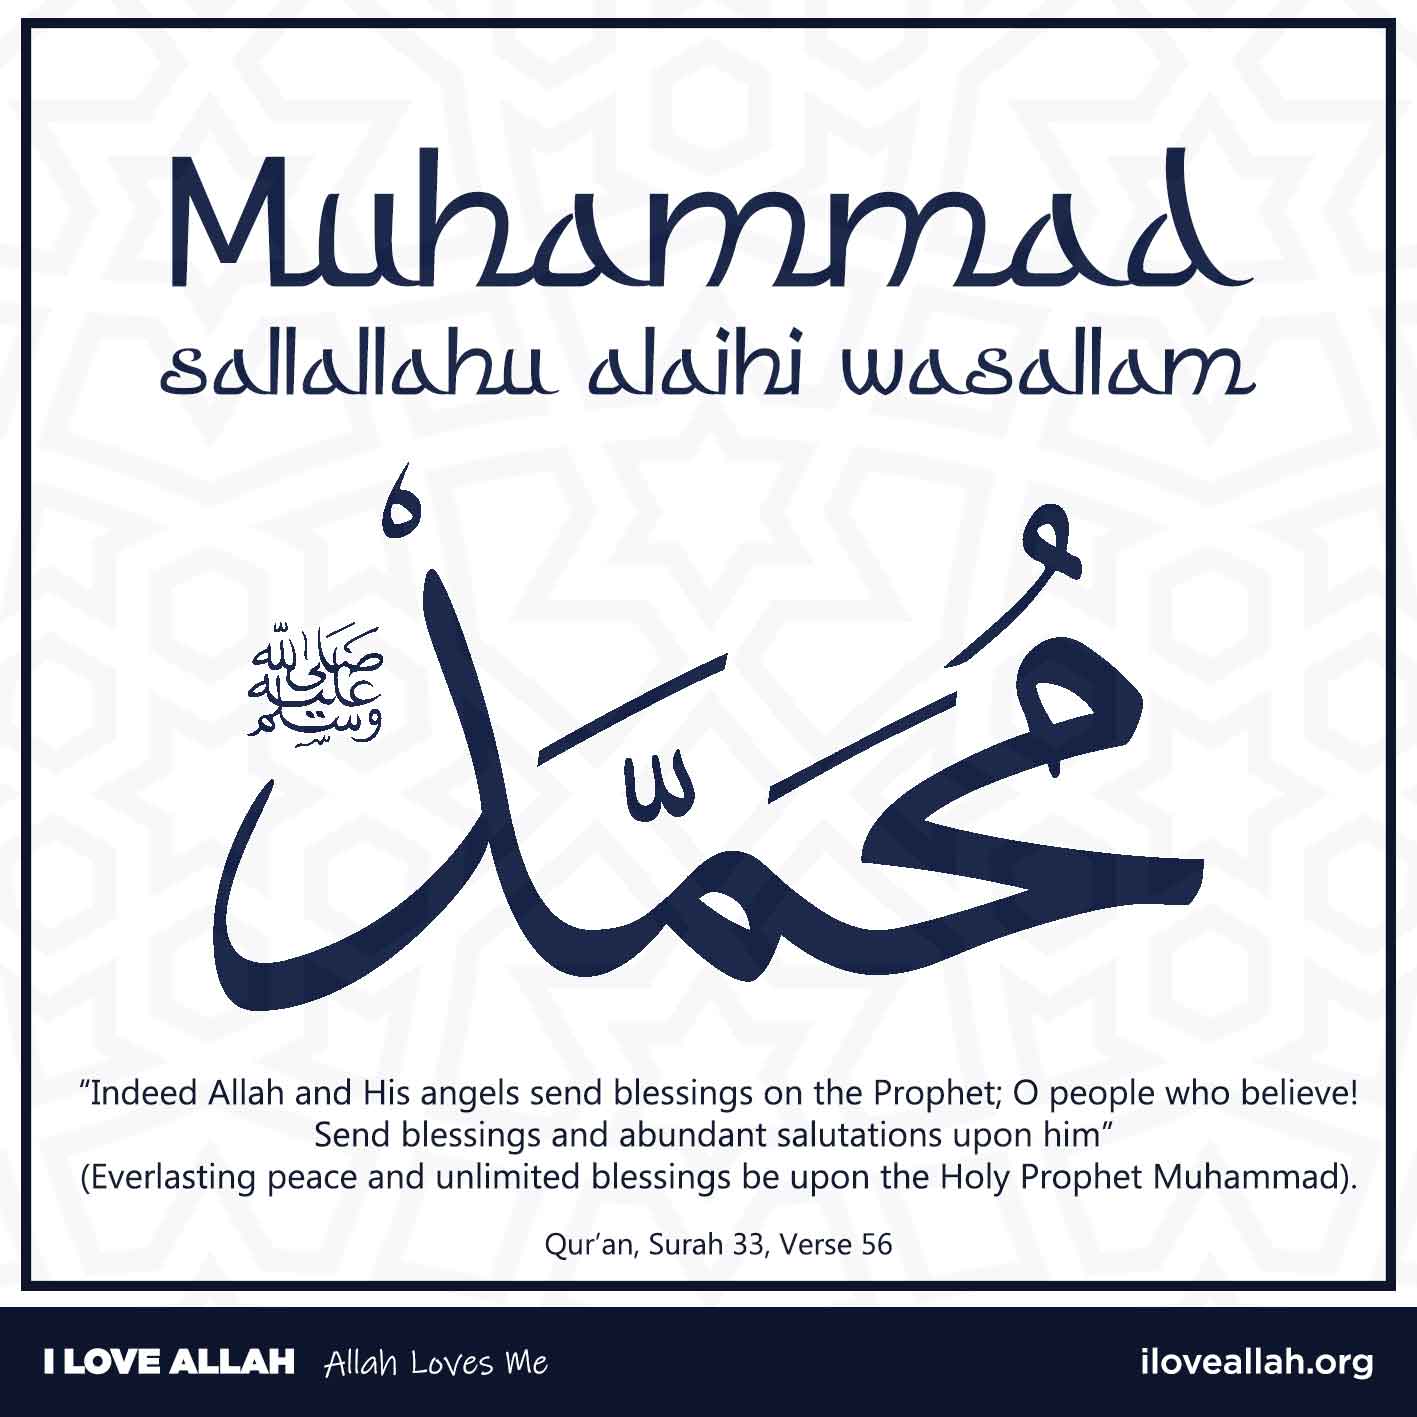 Prophet Muhammad Sallallahu alaihi wasallam - I Love Allah - Allah Loves Me - iloveallah.org